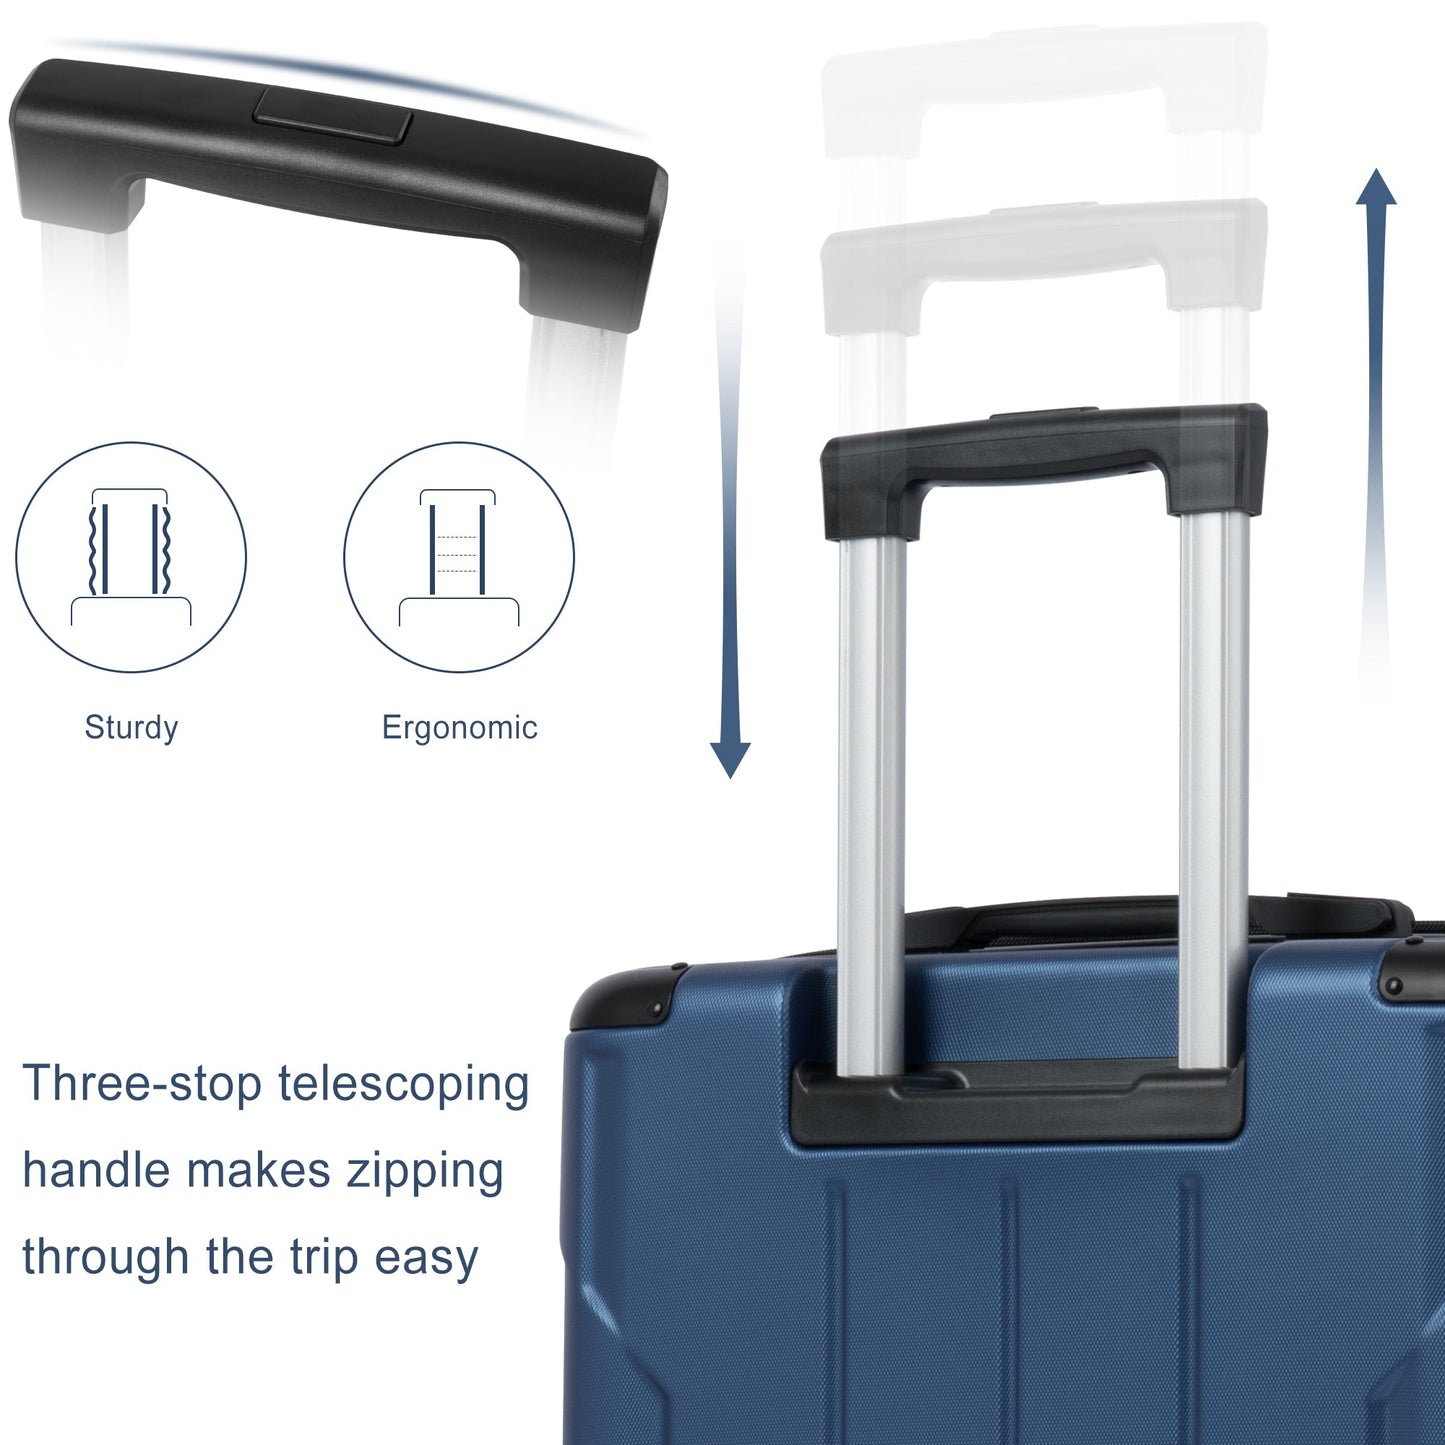 Hardshell Luggage Spinner Suitcase with TSA Lock Lightweight 20in - Demine Essentials